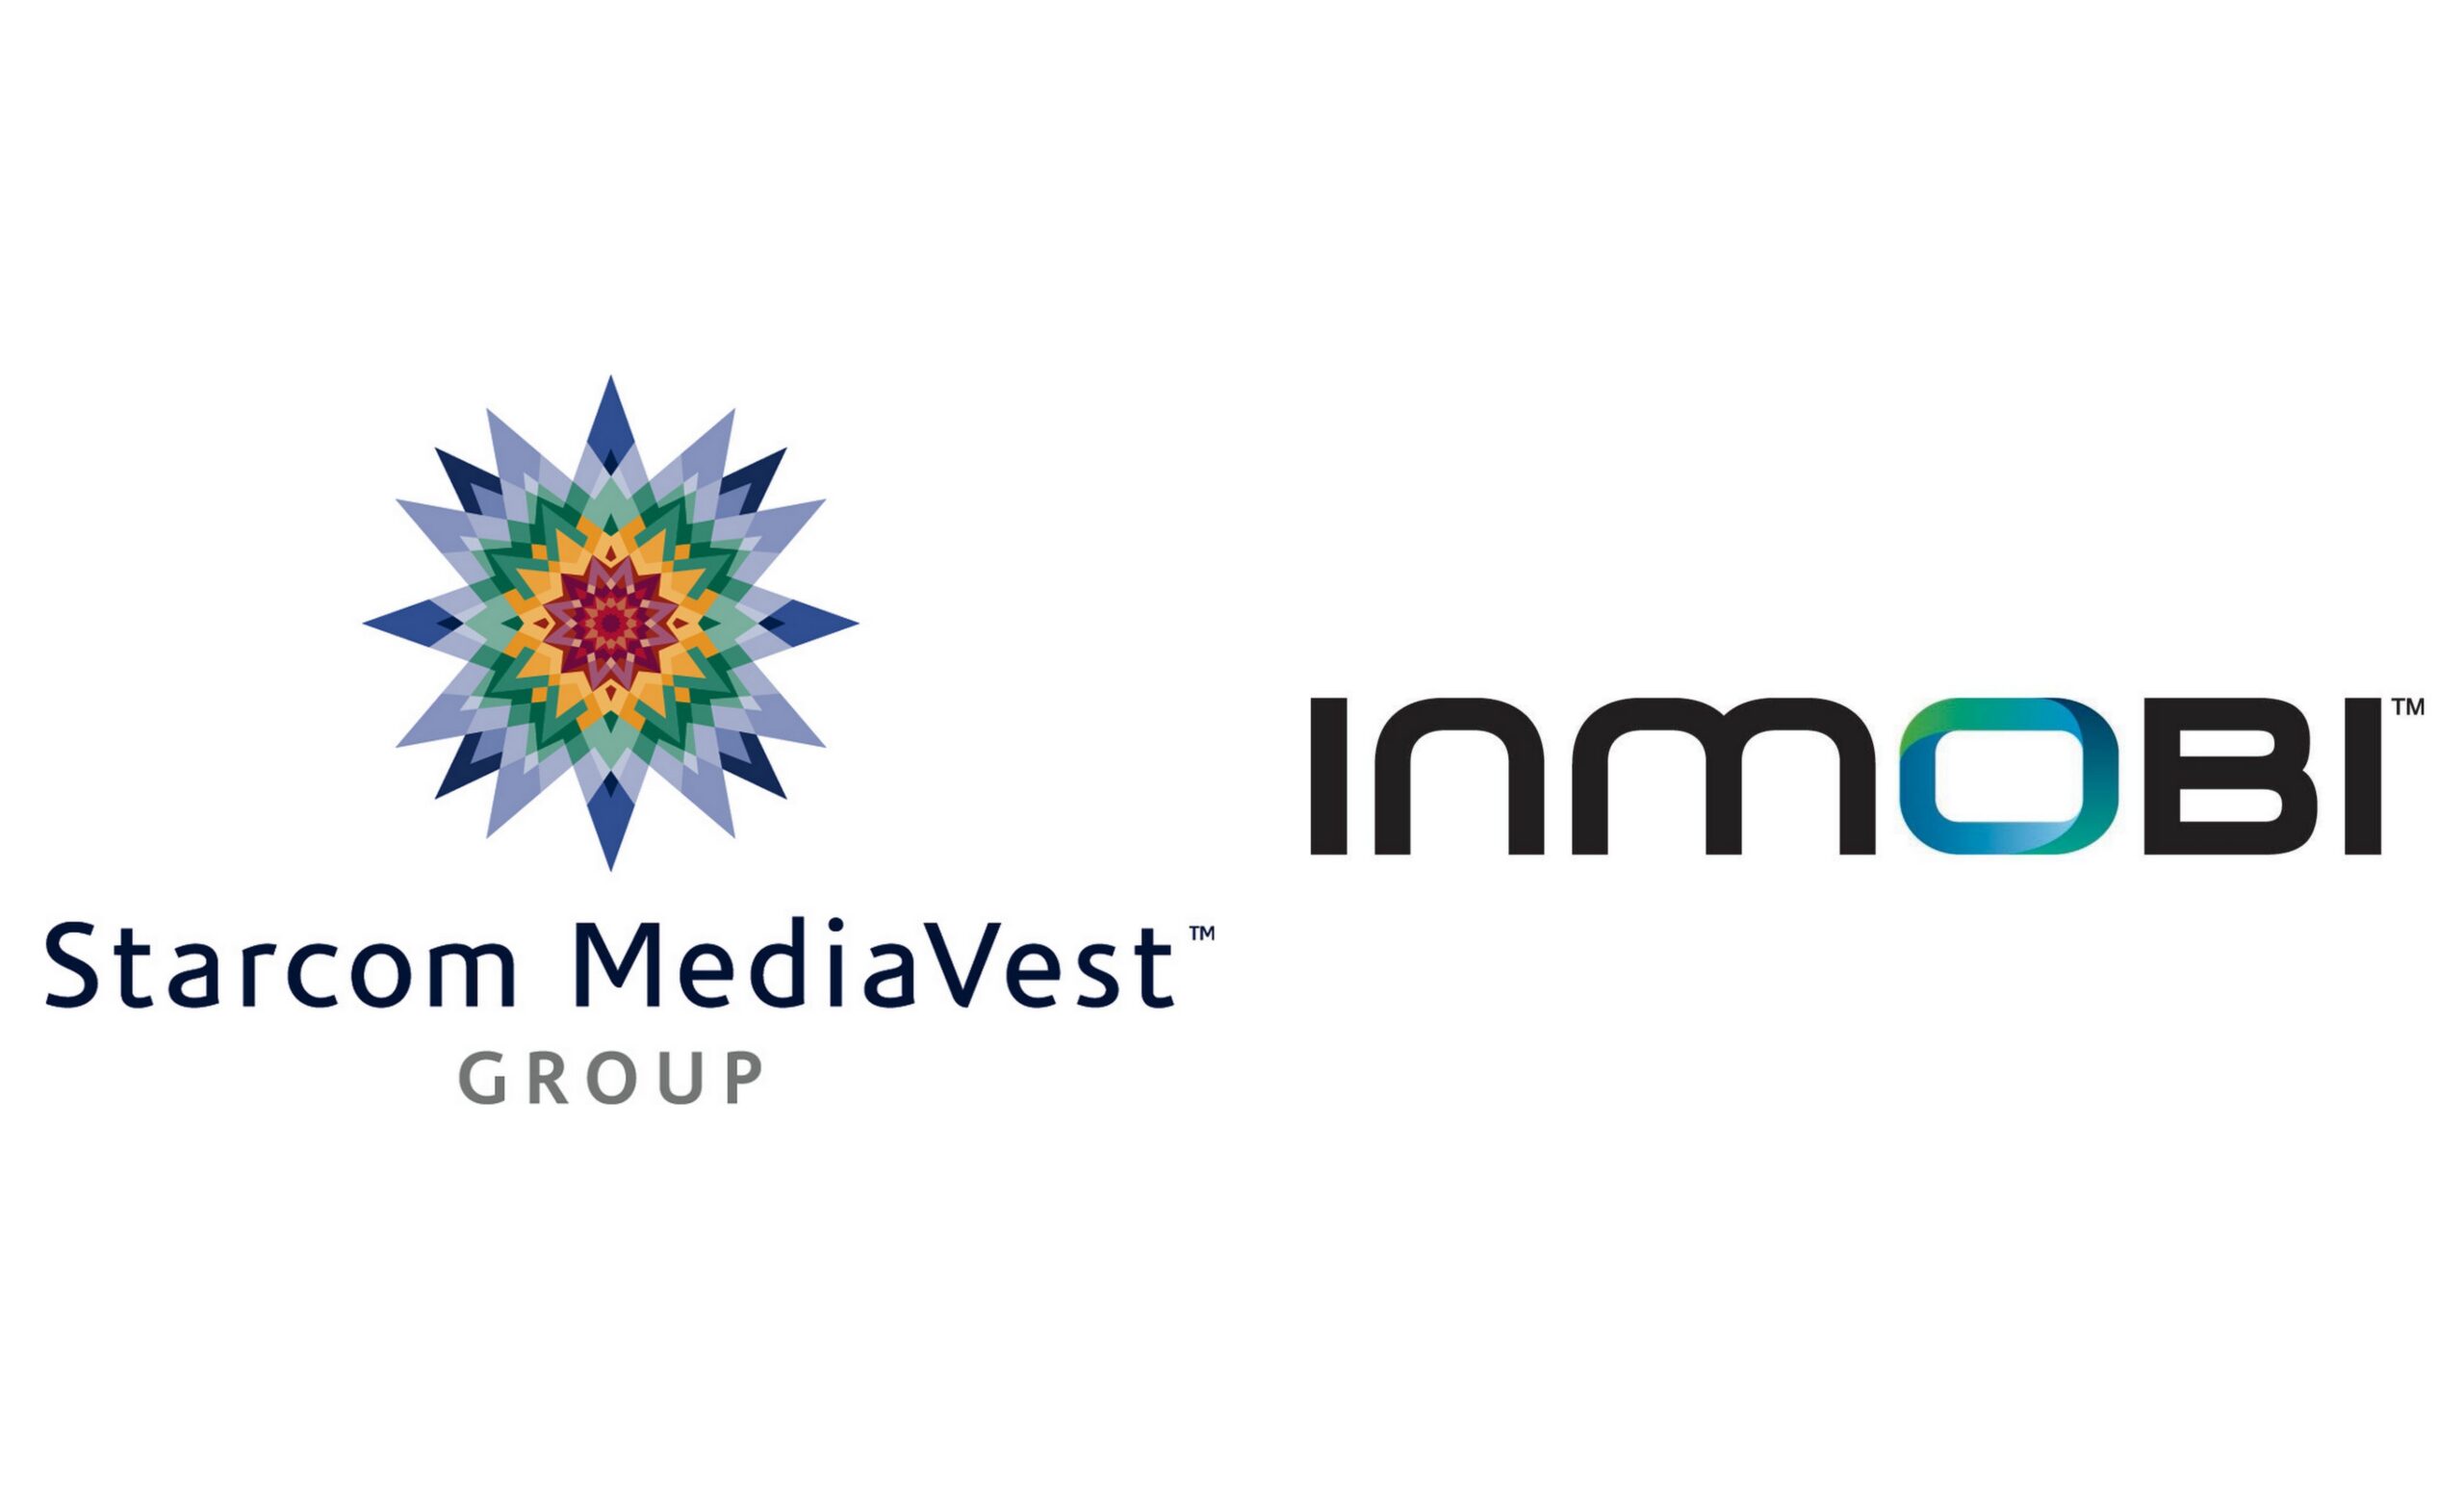 InMobi strategicznym partnerem Starcom MediaVest partnerstwo strategiczne mediarun com smg inmobi scaled